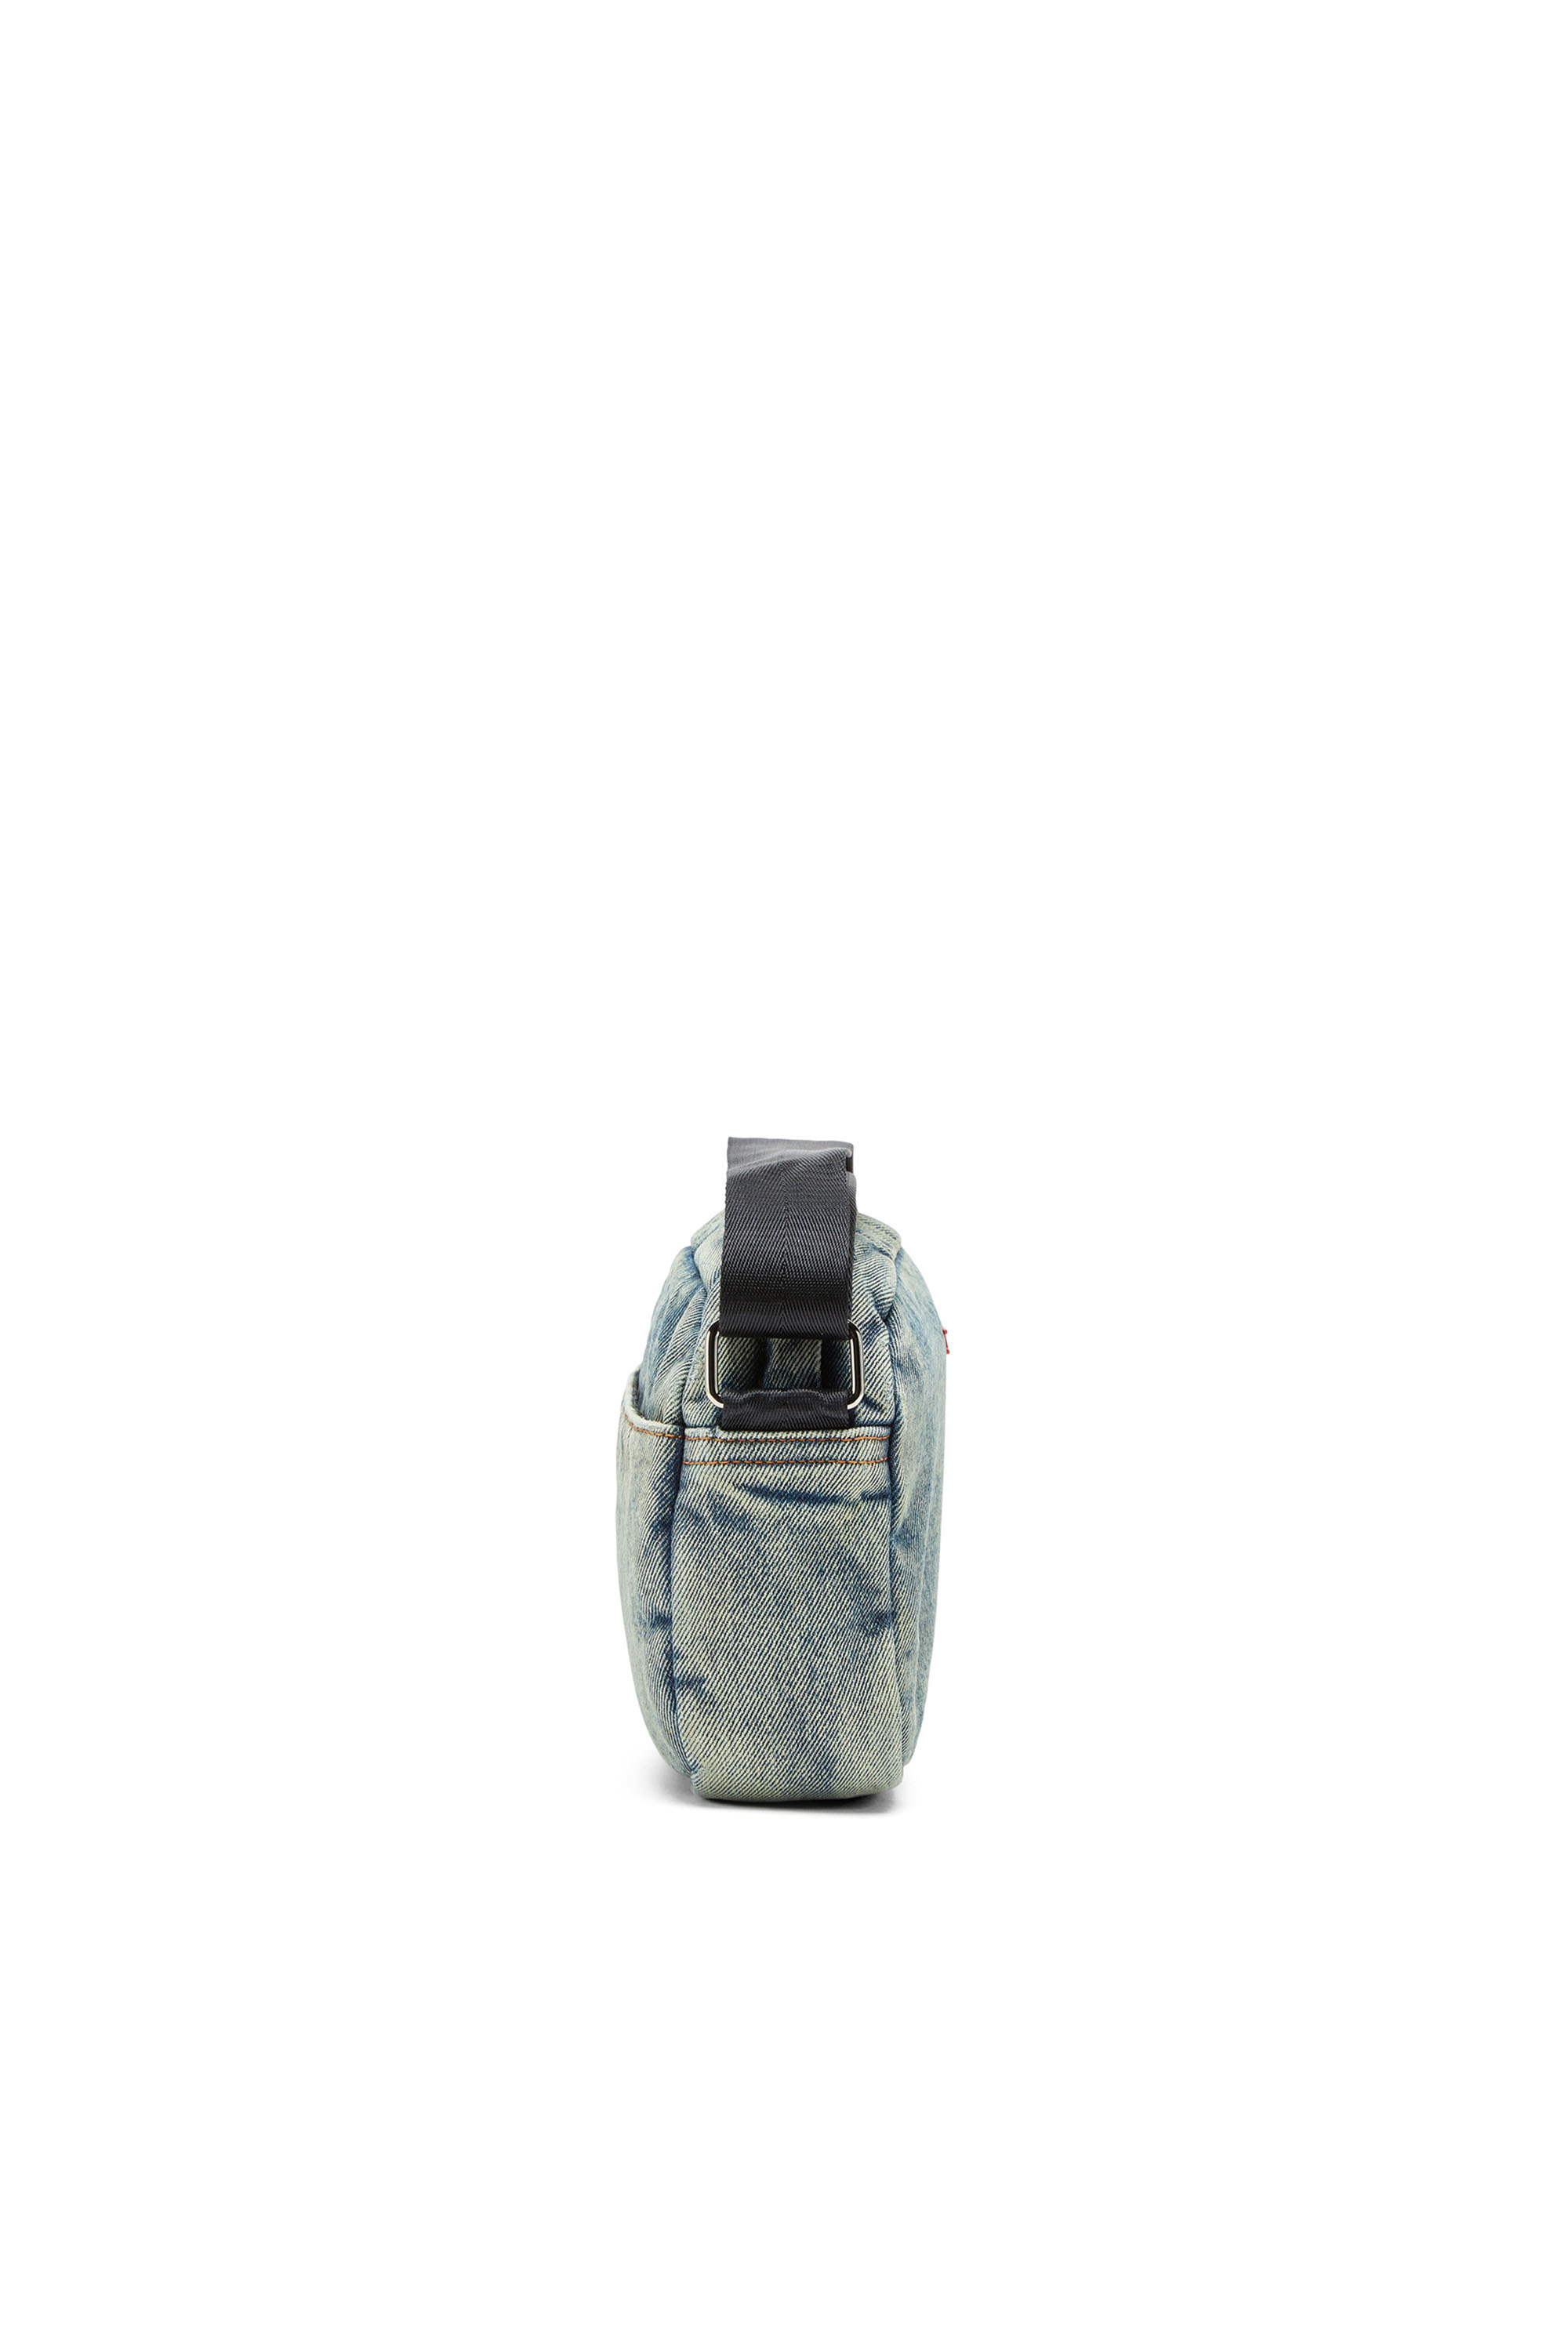 Diesel - RAVE CAMERA BAG X, Hombre Rave-Bolso tipo cámara de denim solarizado in Azul marino - Image 3